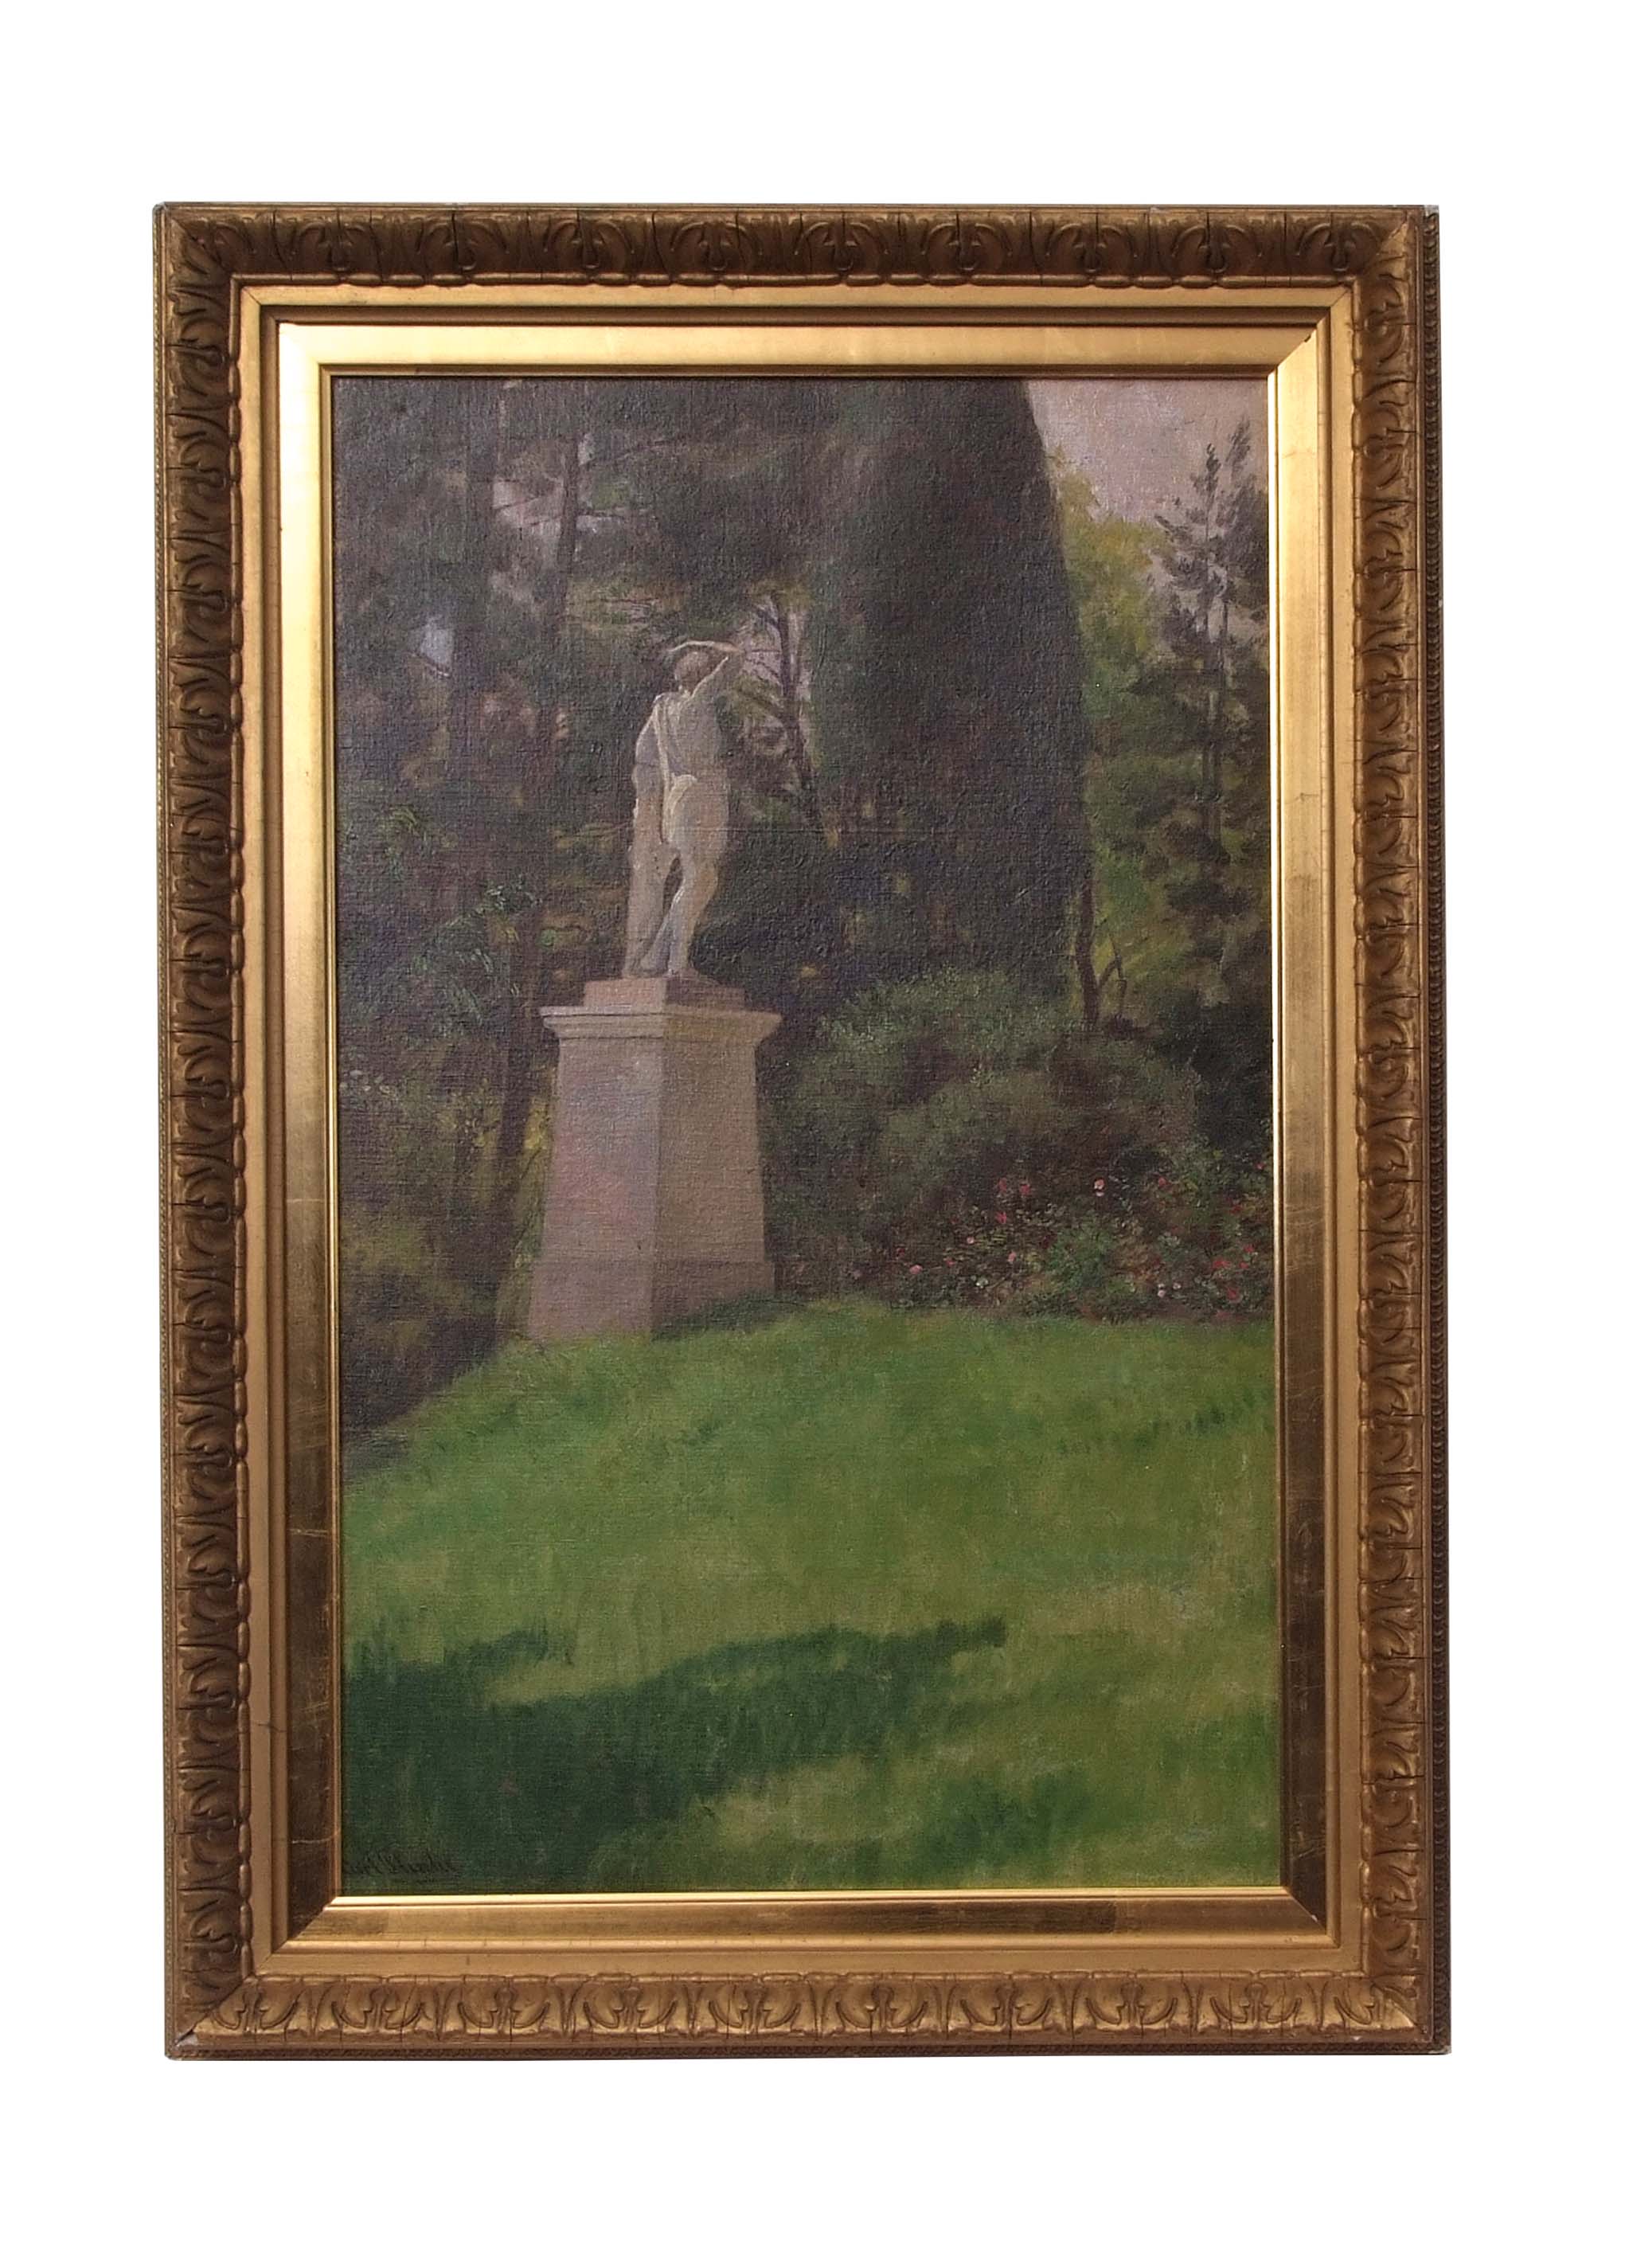 Carl Plinke (born 1867), Garden scene with statue, oil on canvas, signed lower left, 64 x 39cm